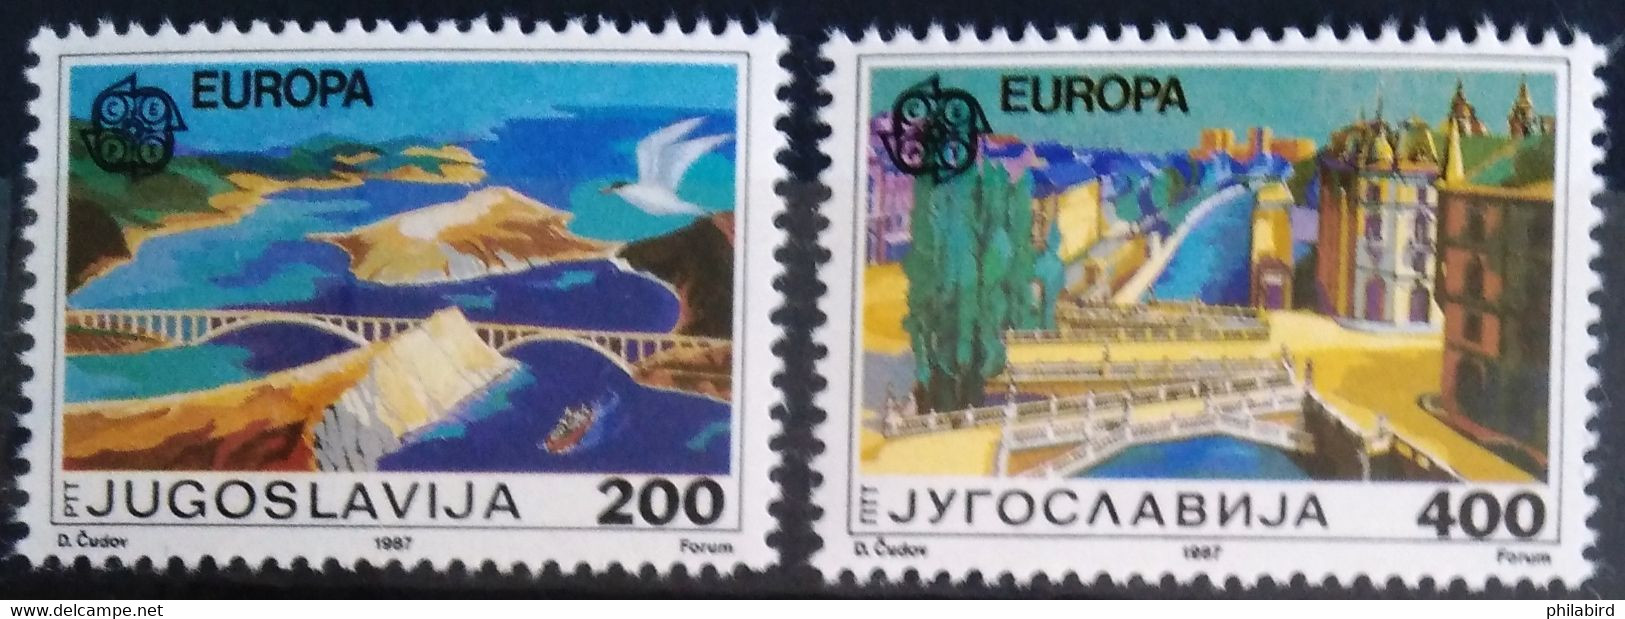 EUROPA 1987 - YOUGOSLAVIE                 N° 2098/2099                        NEUF** - 1987